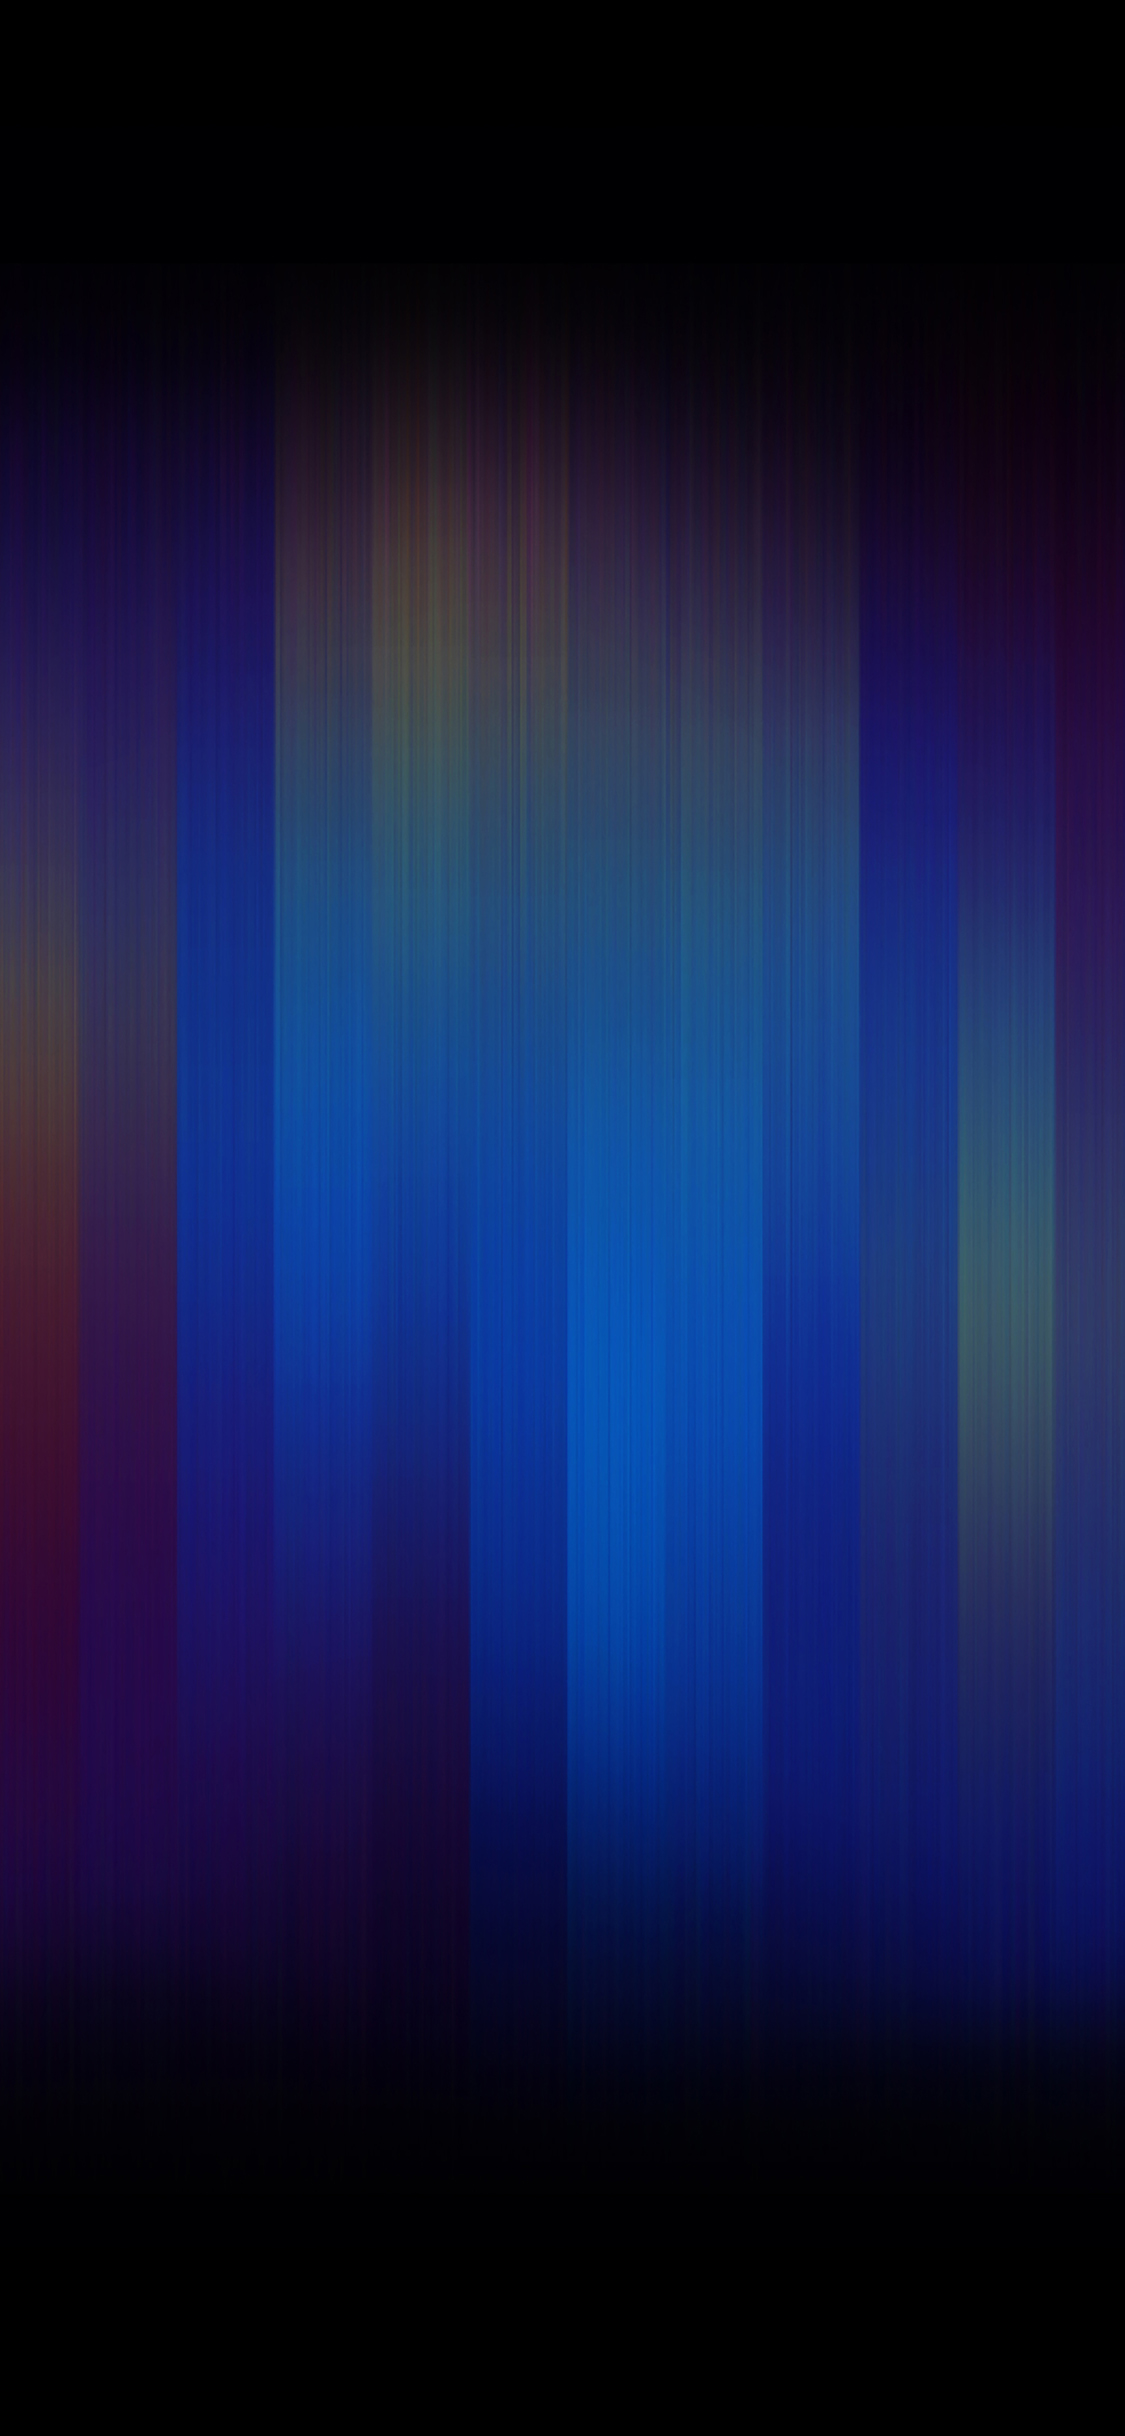 Iphone X Wallpaper Perspective - 1125x2436 Wallpaper 